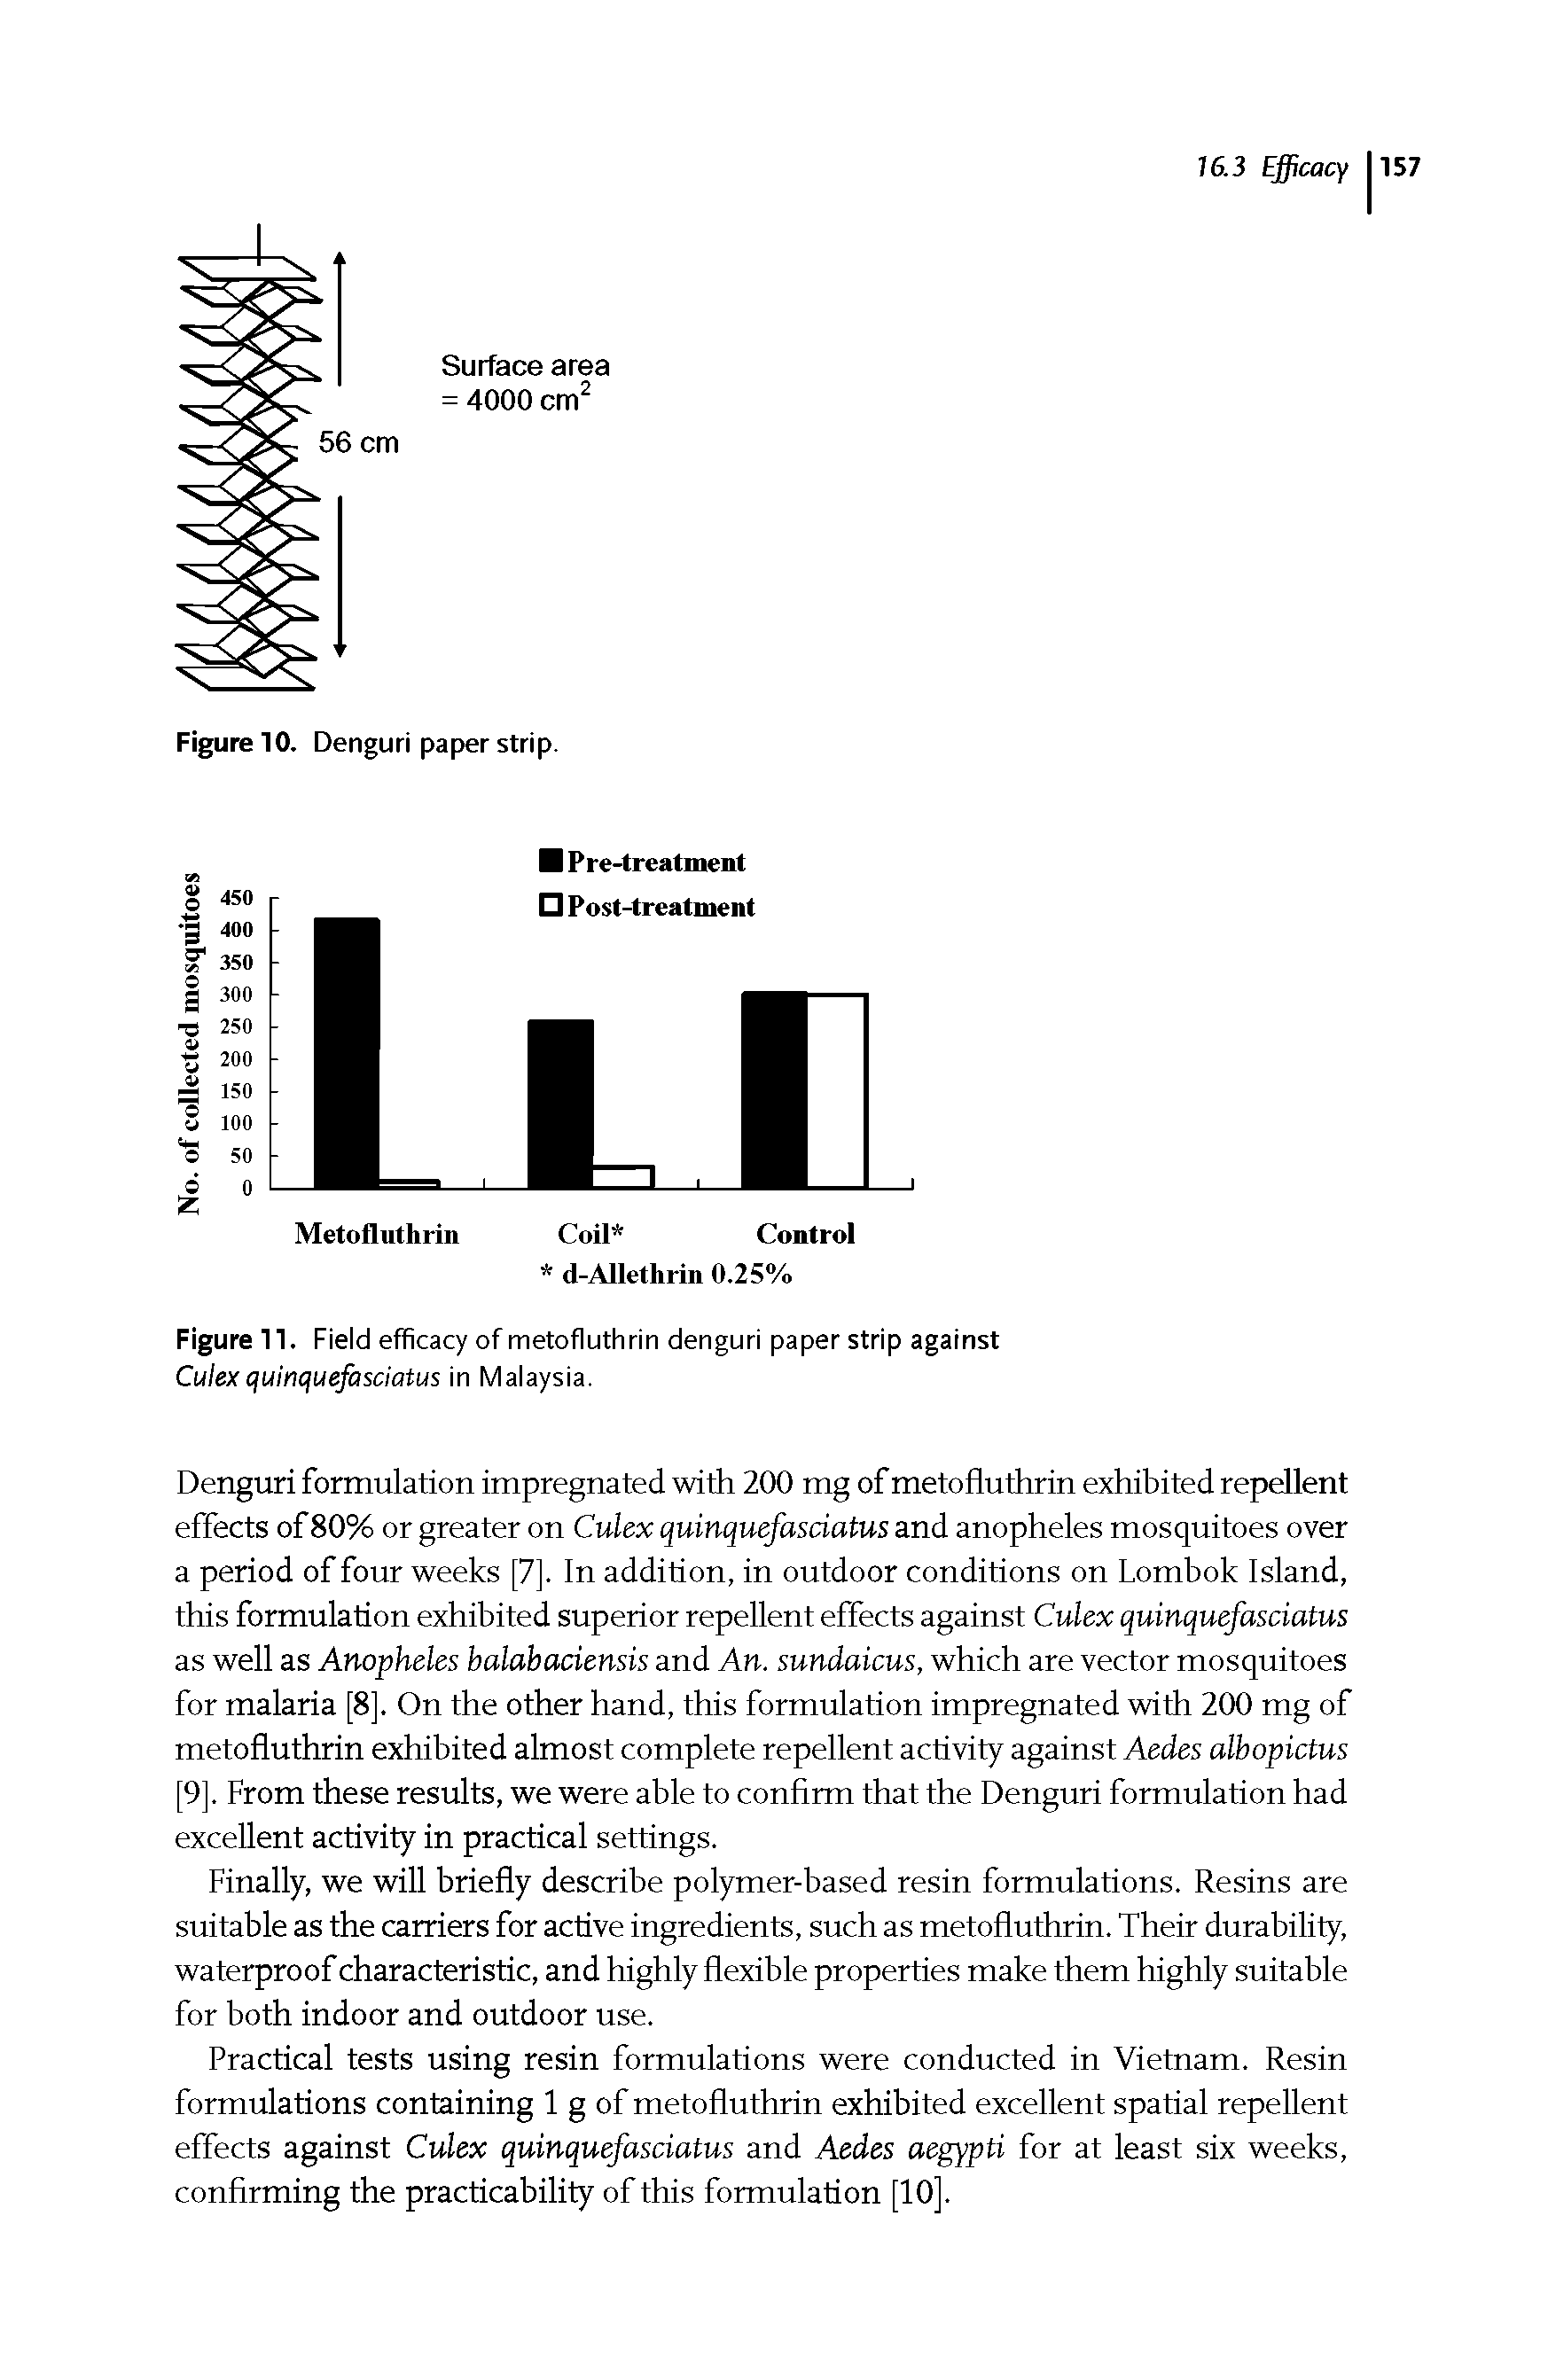 Figure 11. Field efficacy of metofluthrin denguri paper strip against Culexquinquefasciatus in Malaysia.